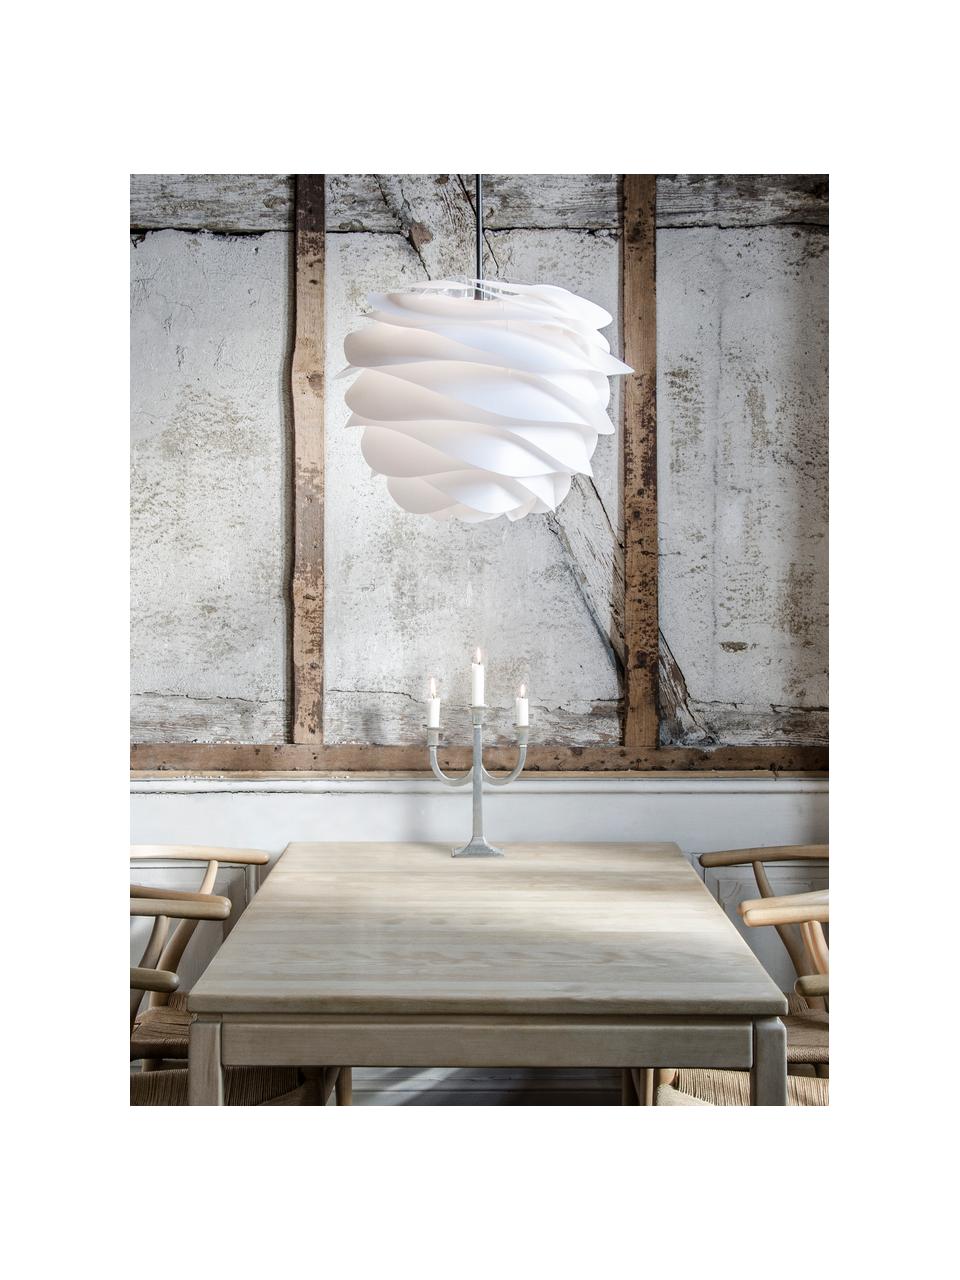 Hanglamp Carmina, bouwpakket, Lampenkap: polypropyleen, Baldakijn: kunststof, Wit, Ø 48  x H 36 cm